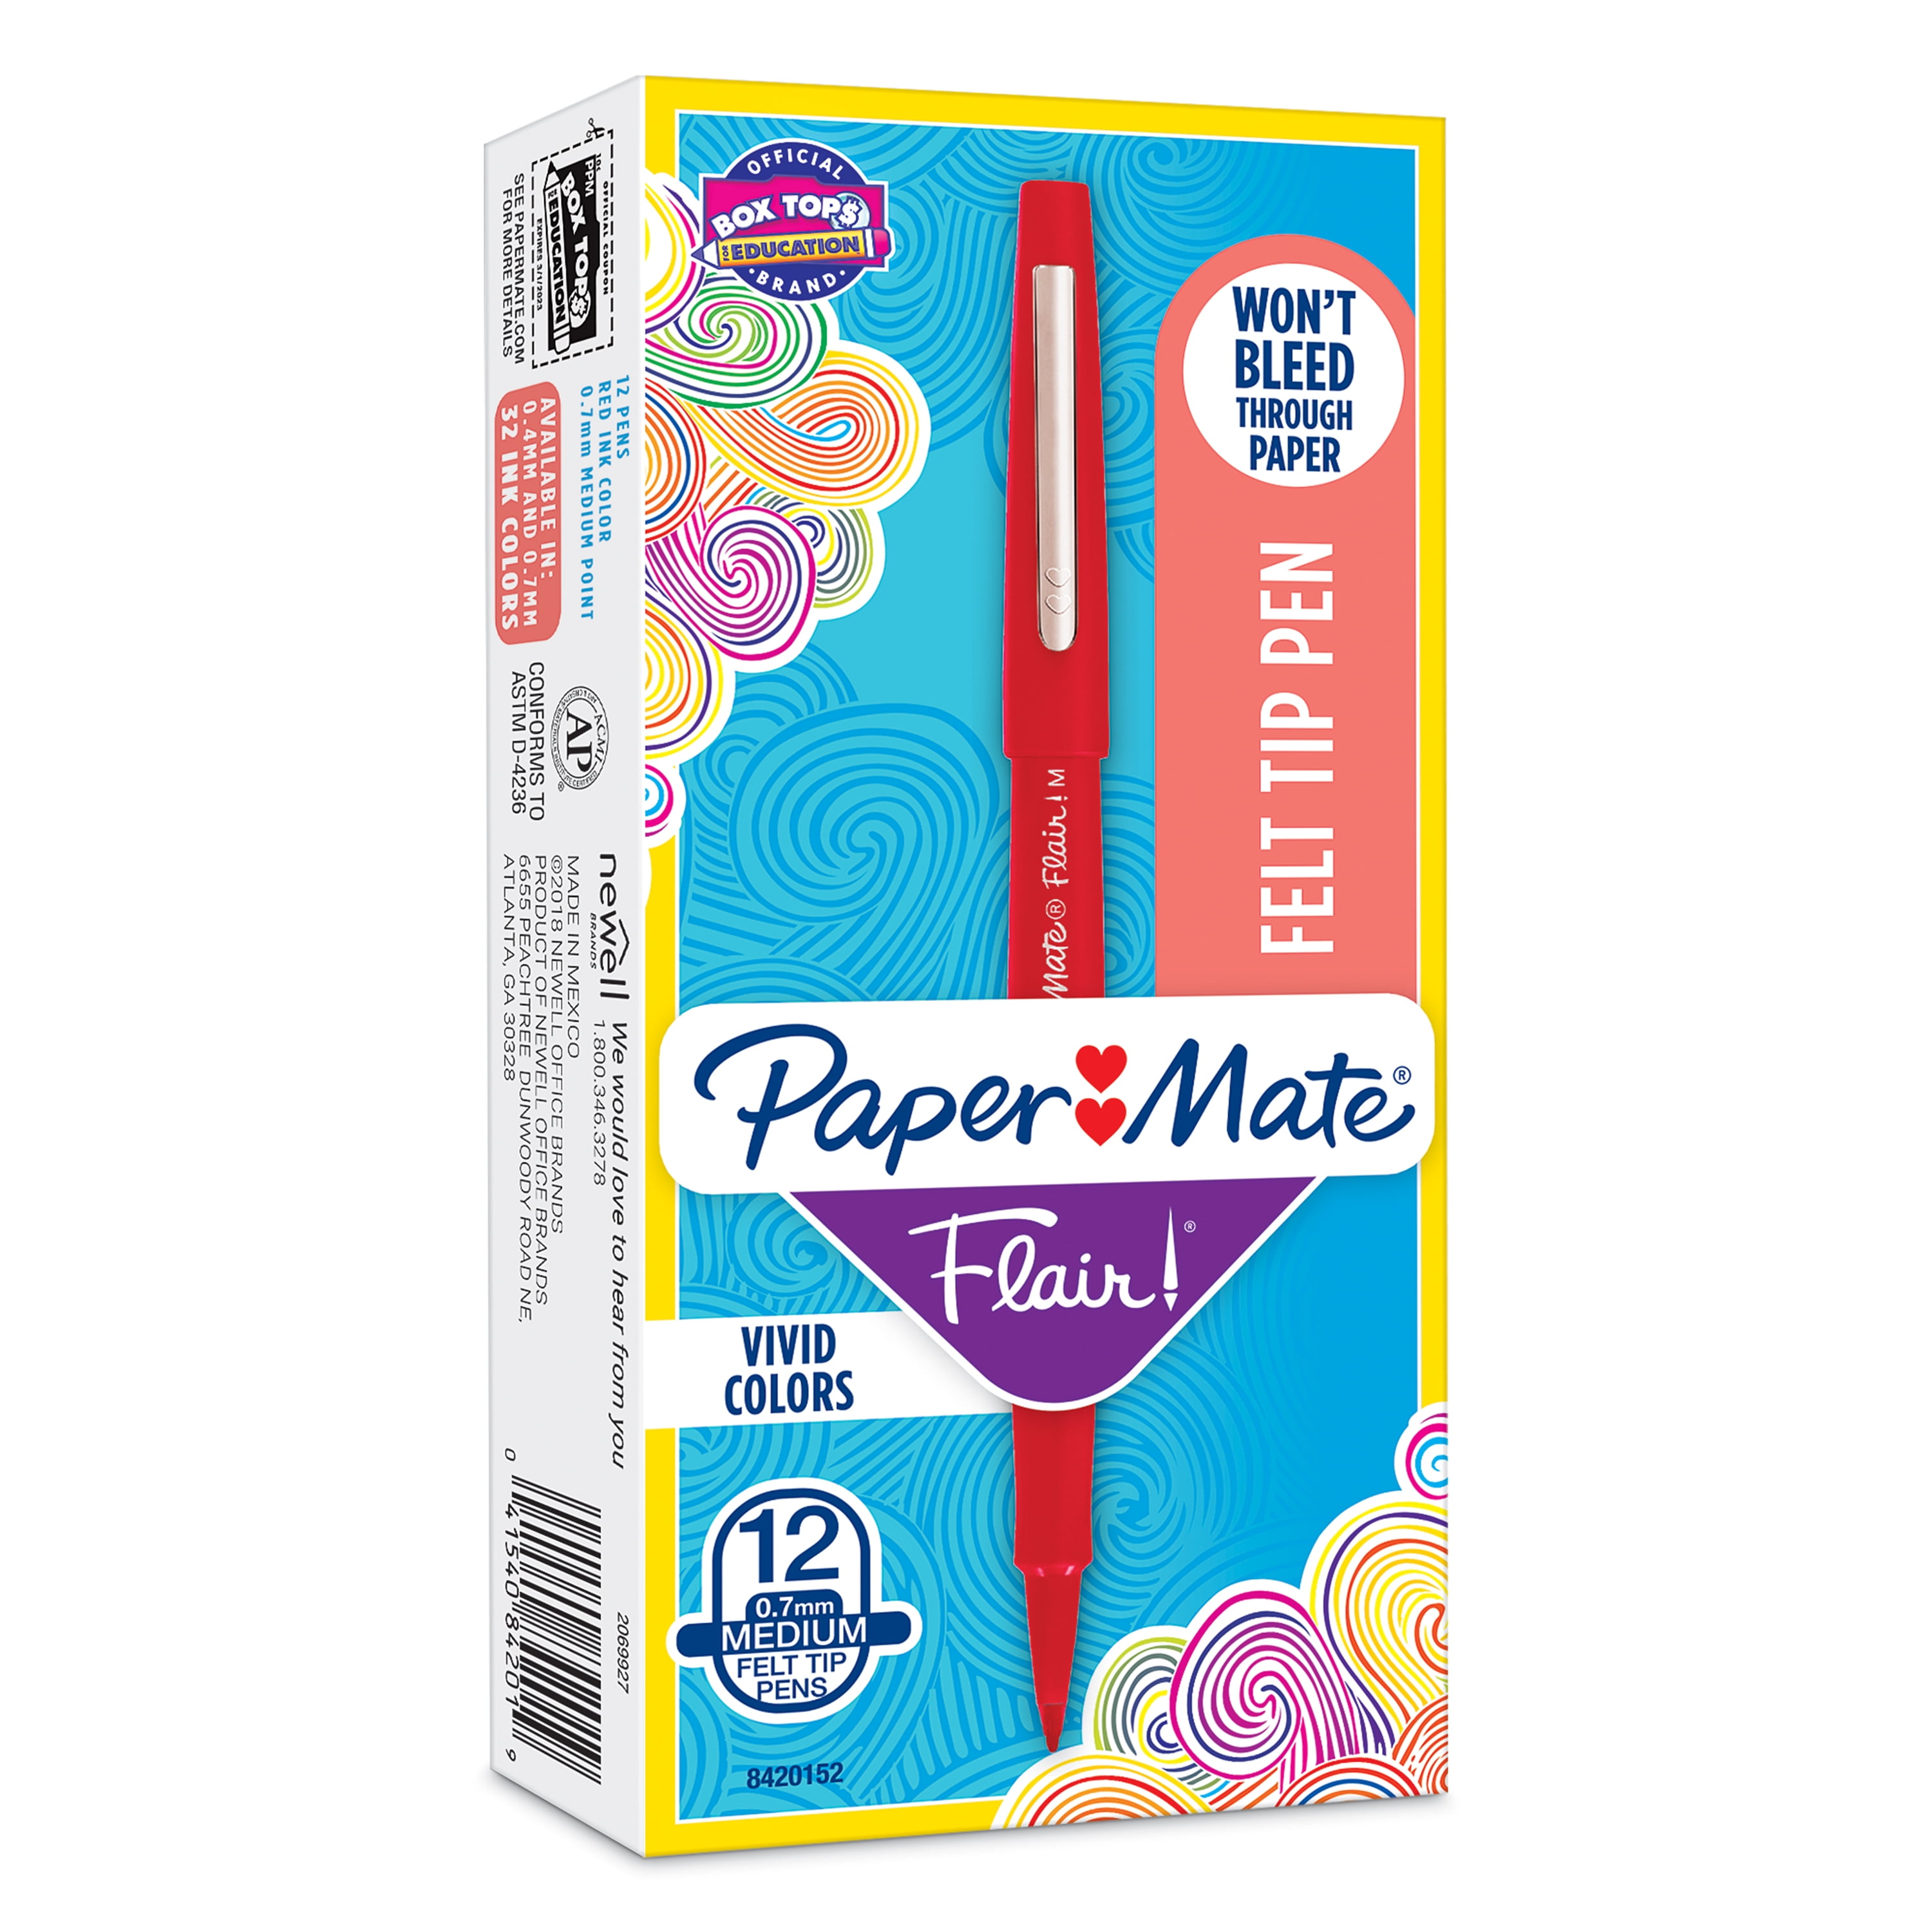 Promotional Paper Mate Flair Felt-Tip Pen $2.22